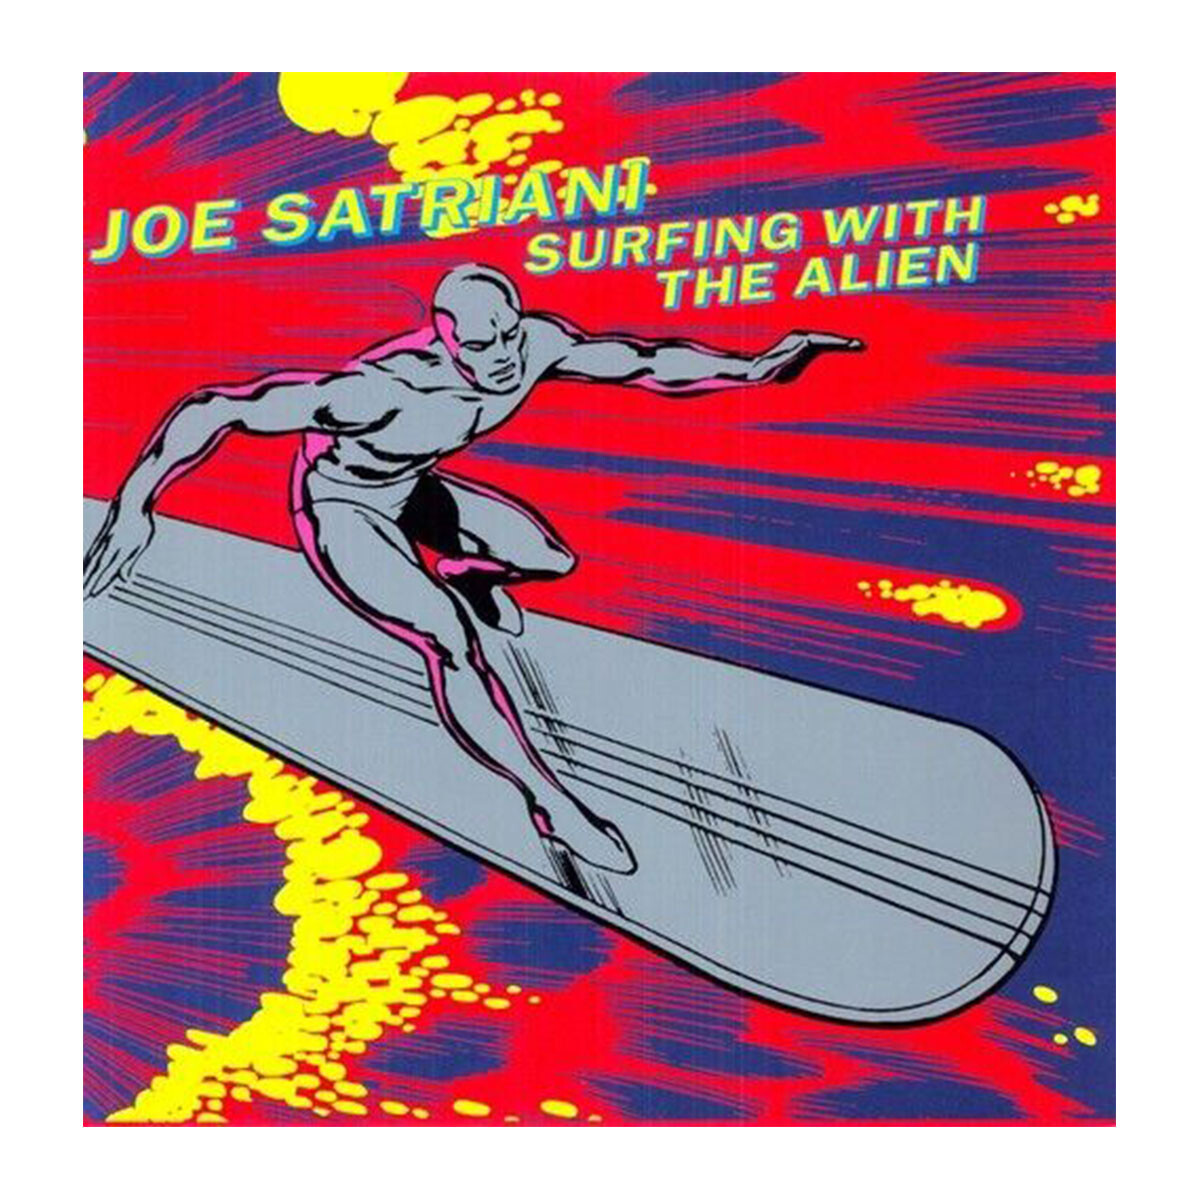 Satriani, Joe - Surfing With The Alien - Vinilo 